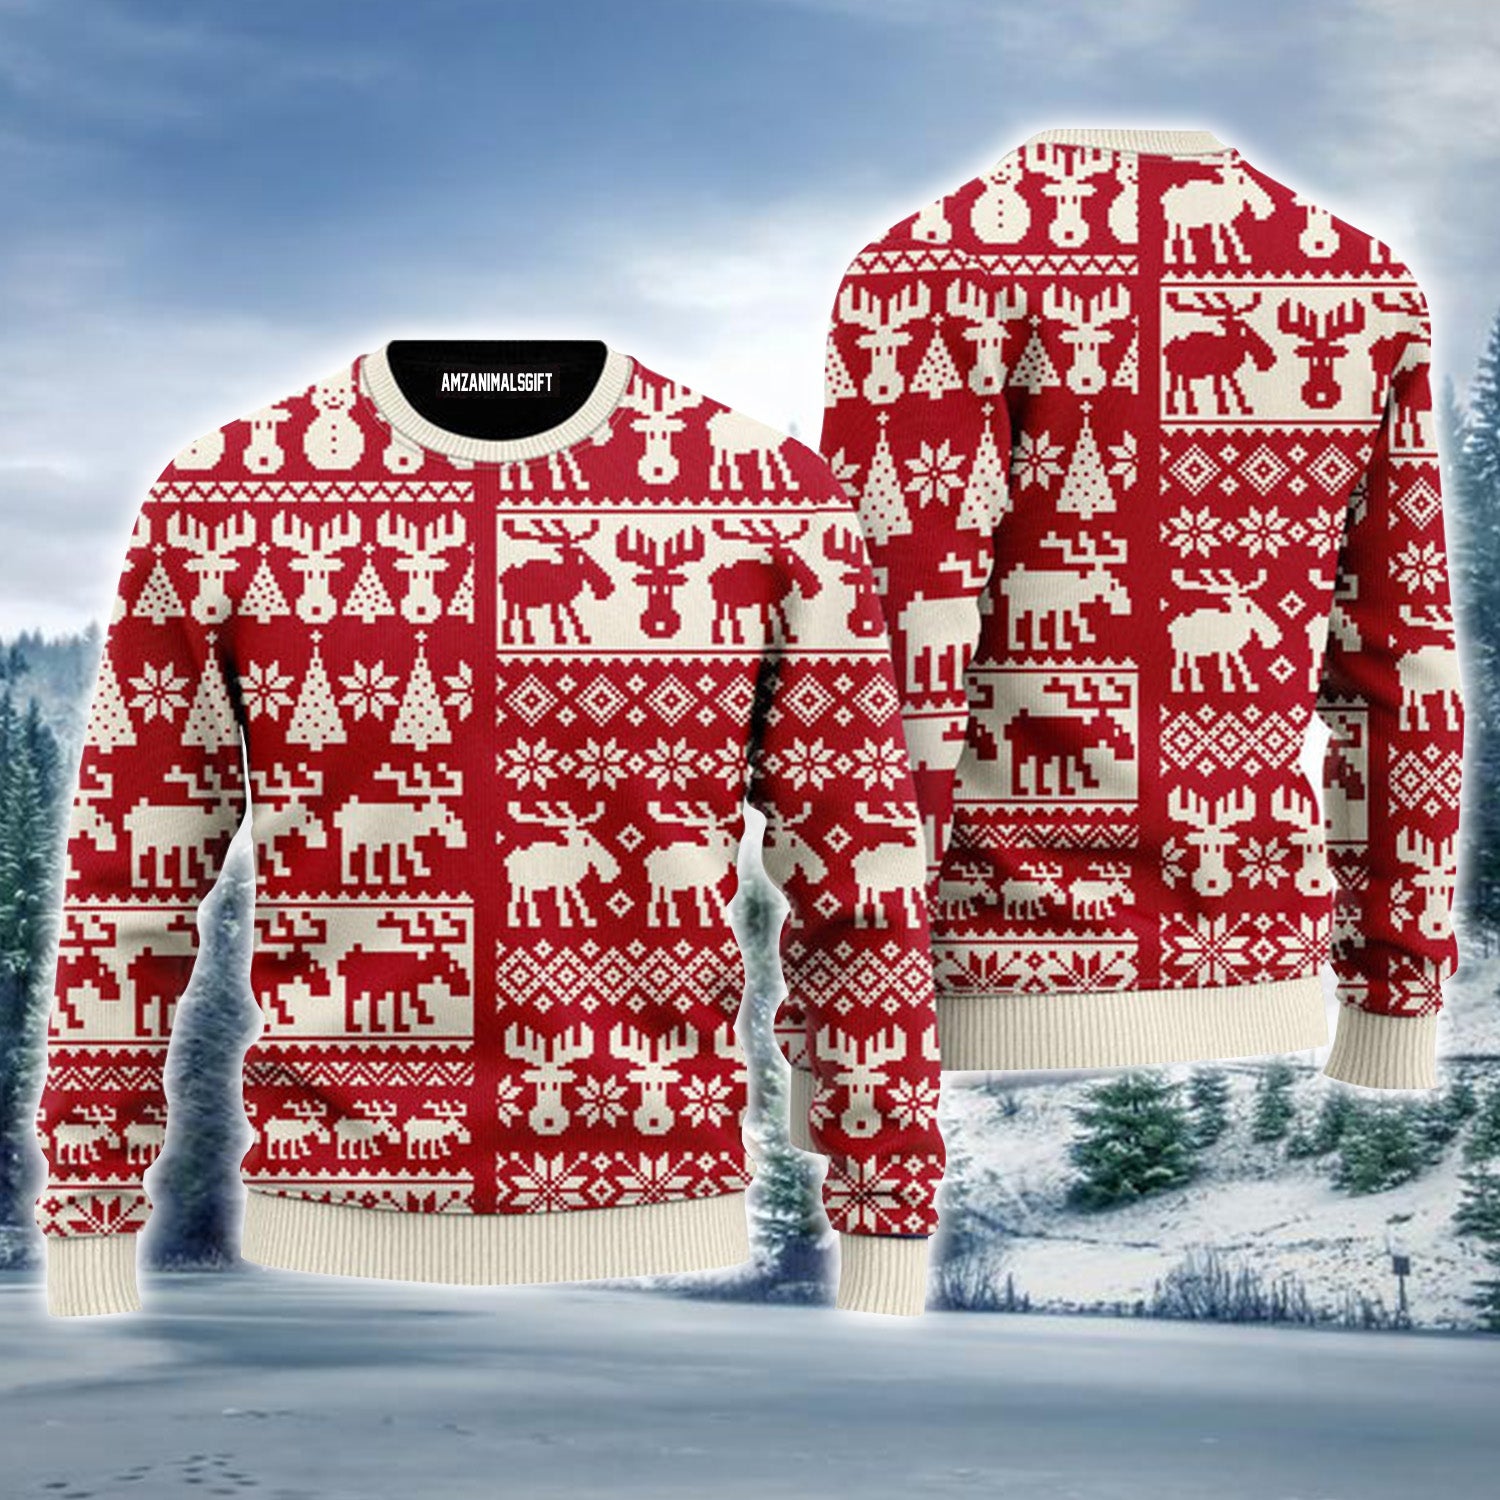 Redmas Fancy Urly Christmas Sweater, Christmas Sweater For Men & Women - Perfect Gift For Christmas, New Year, Winter Holiday